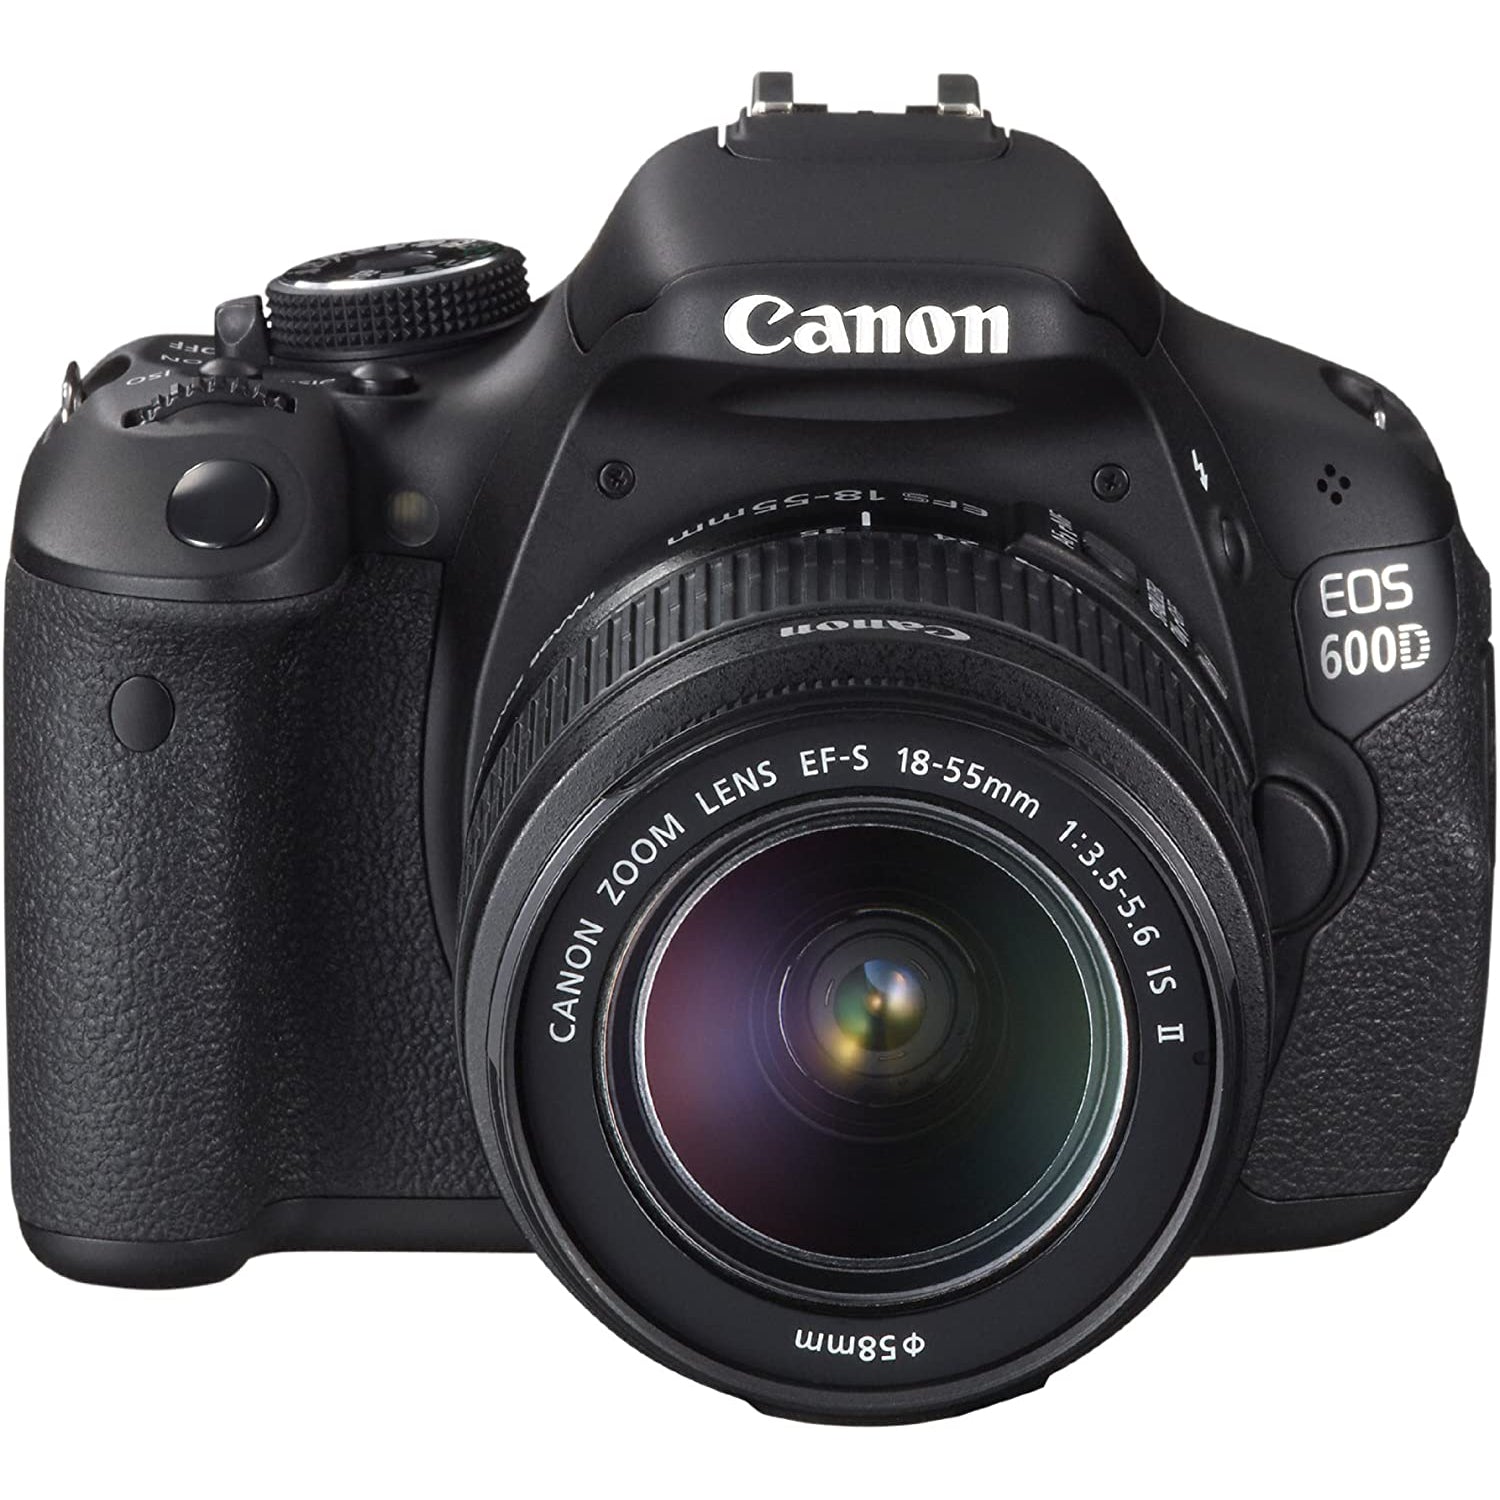 Canon EOS 600D Digital SLR Camera & EFS 18-55mm Macro Image Stabilizer